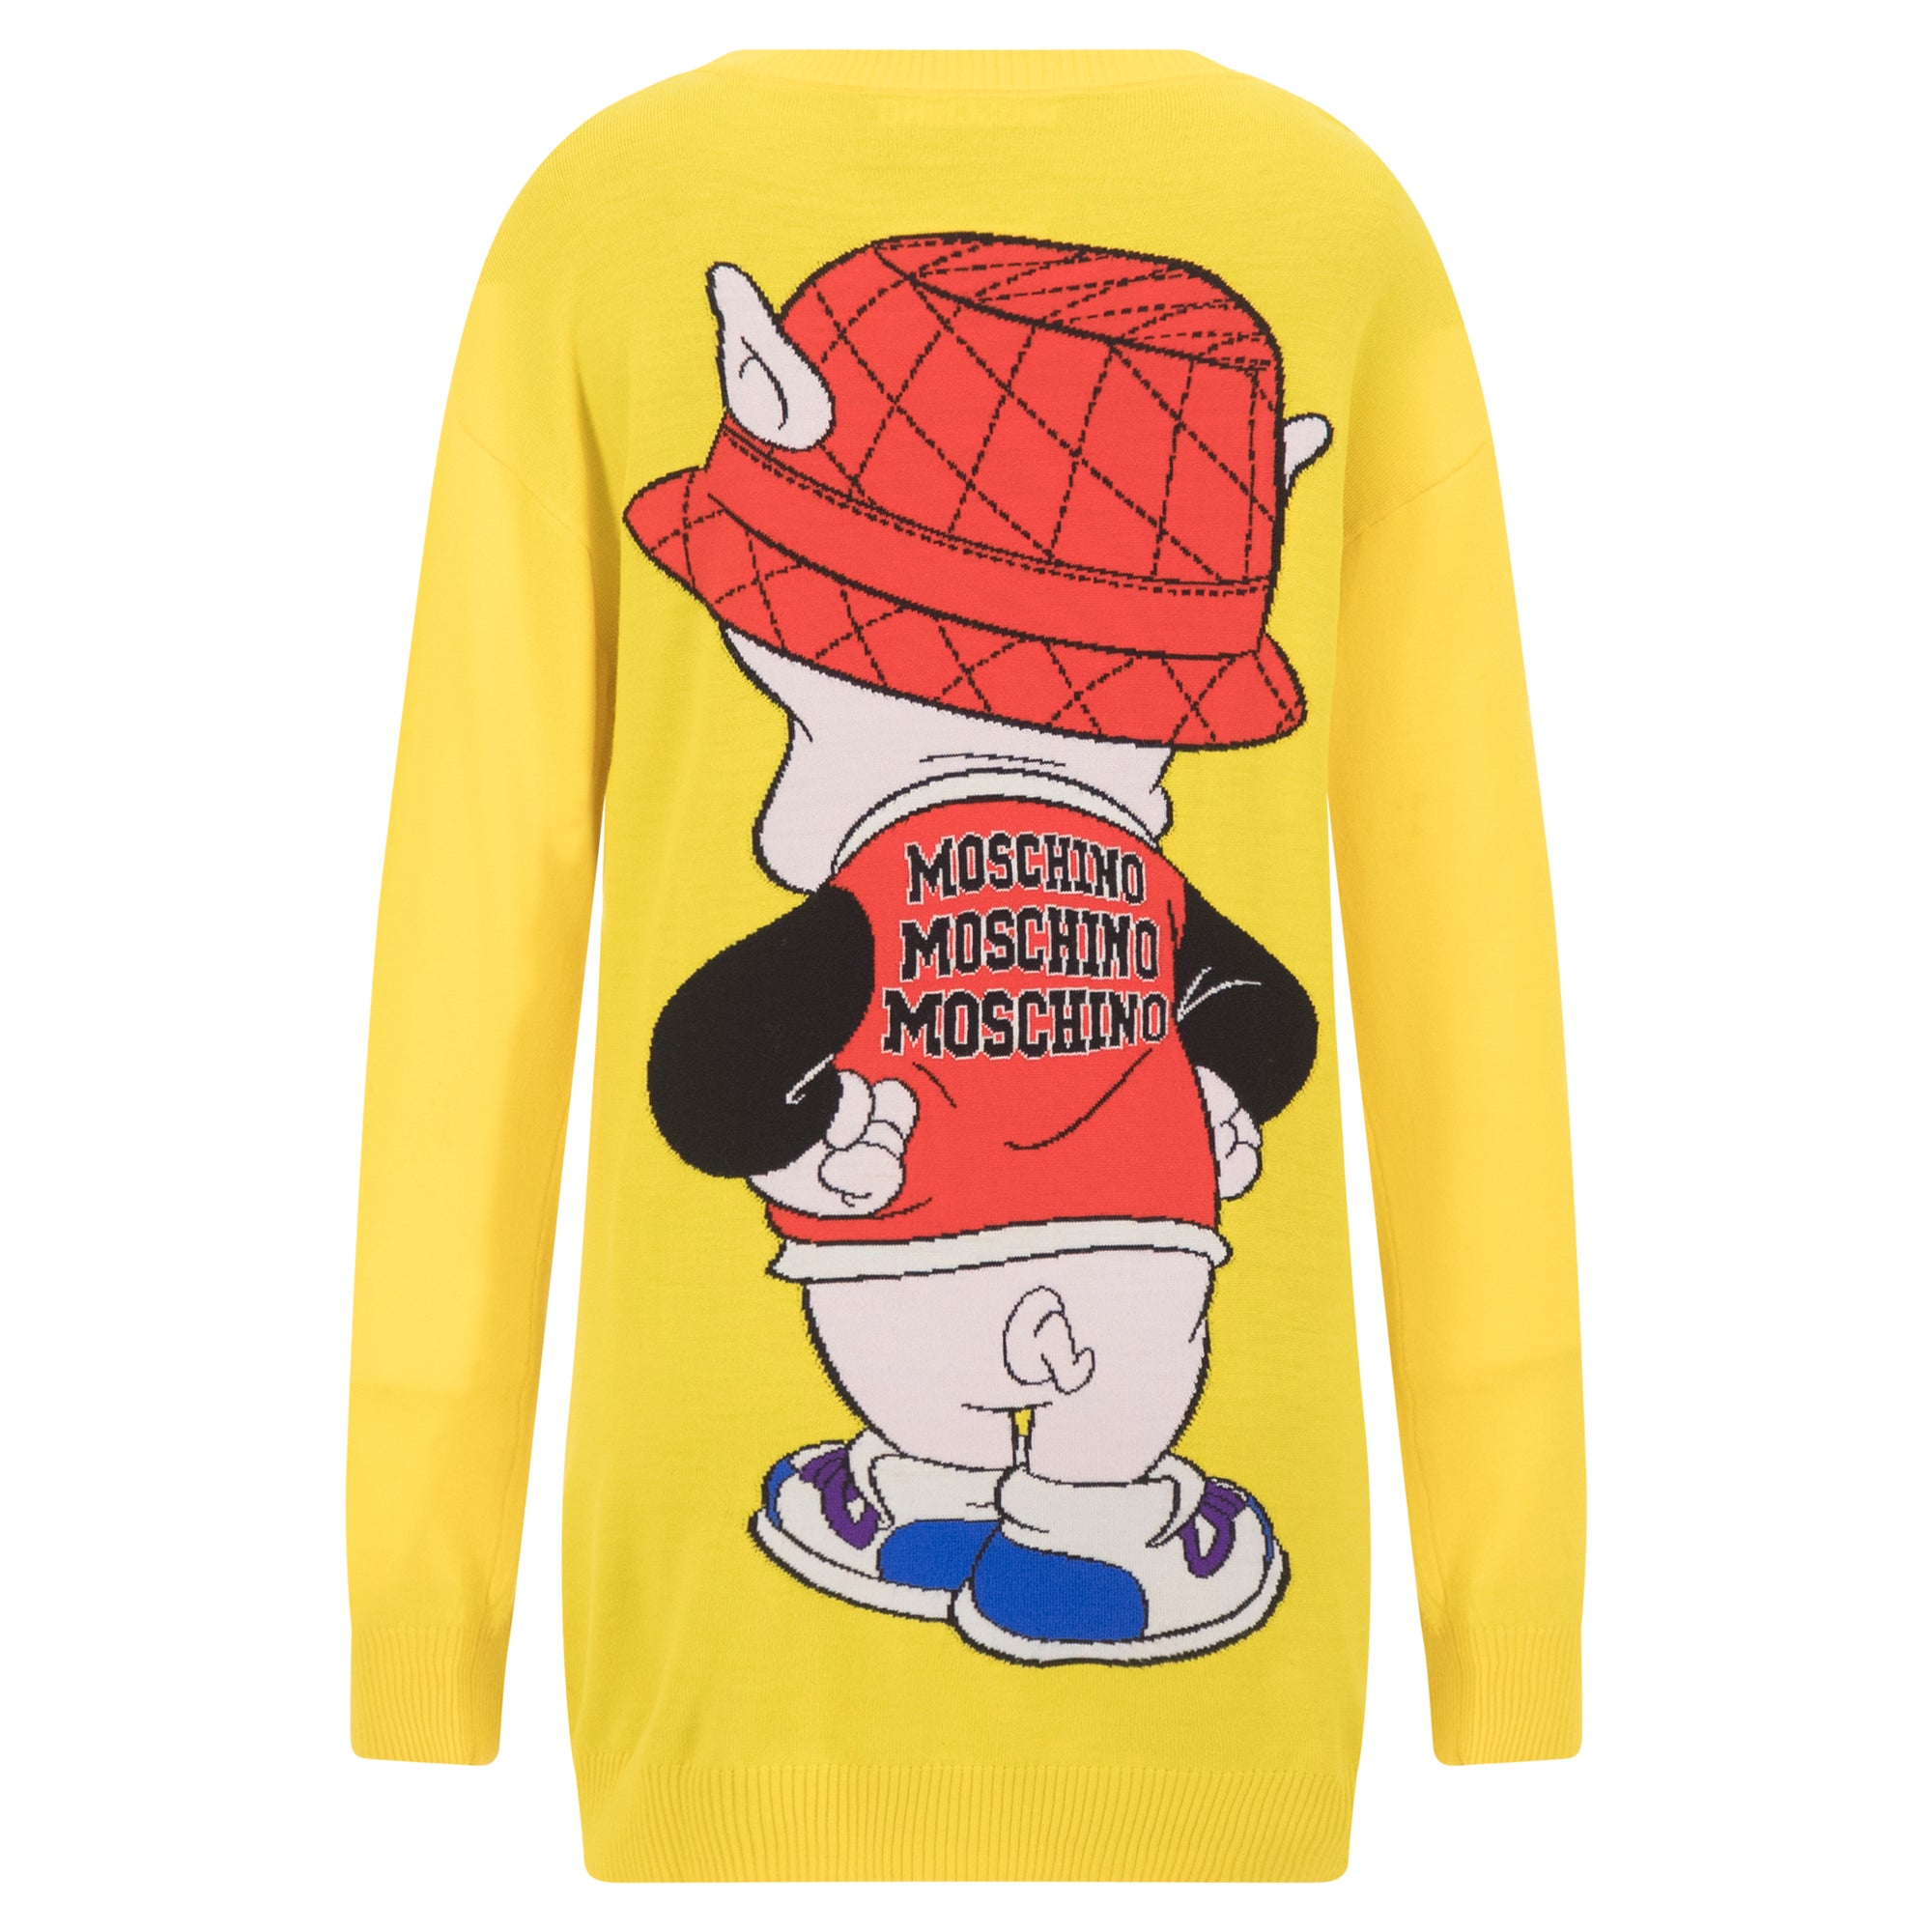 Moschino X Looney Tunes Sweater